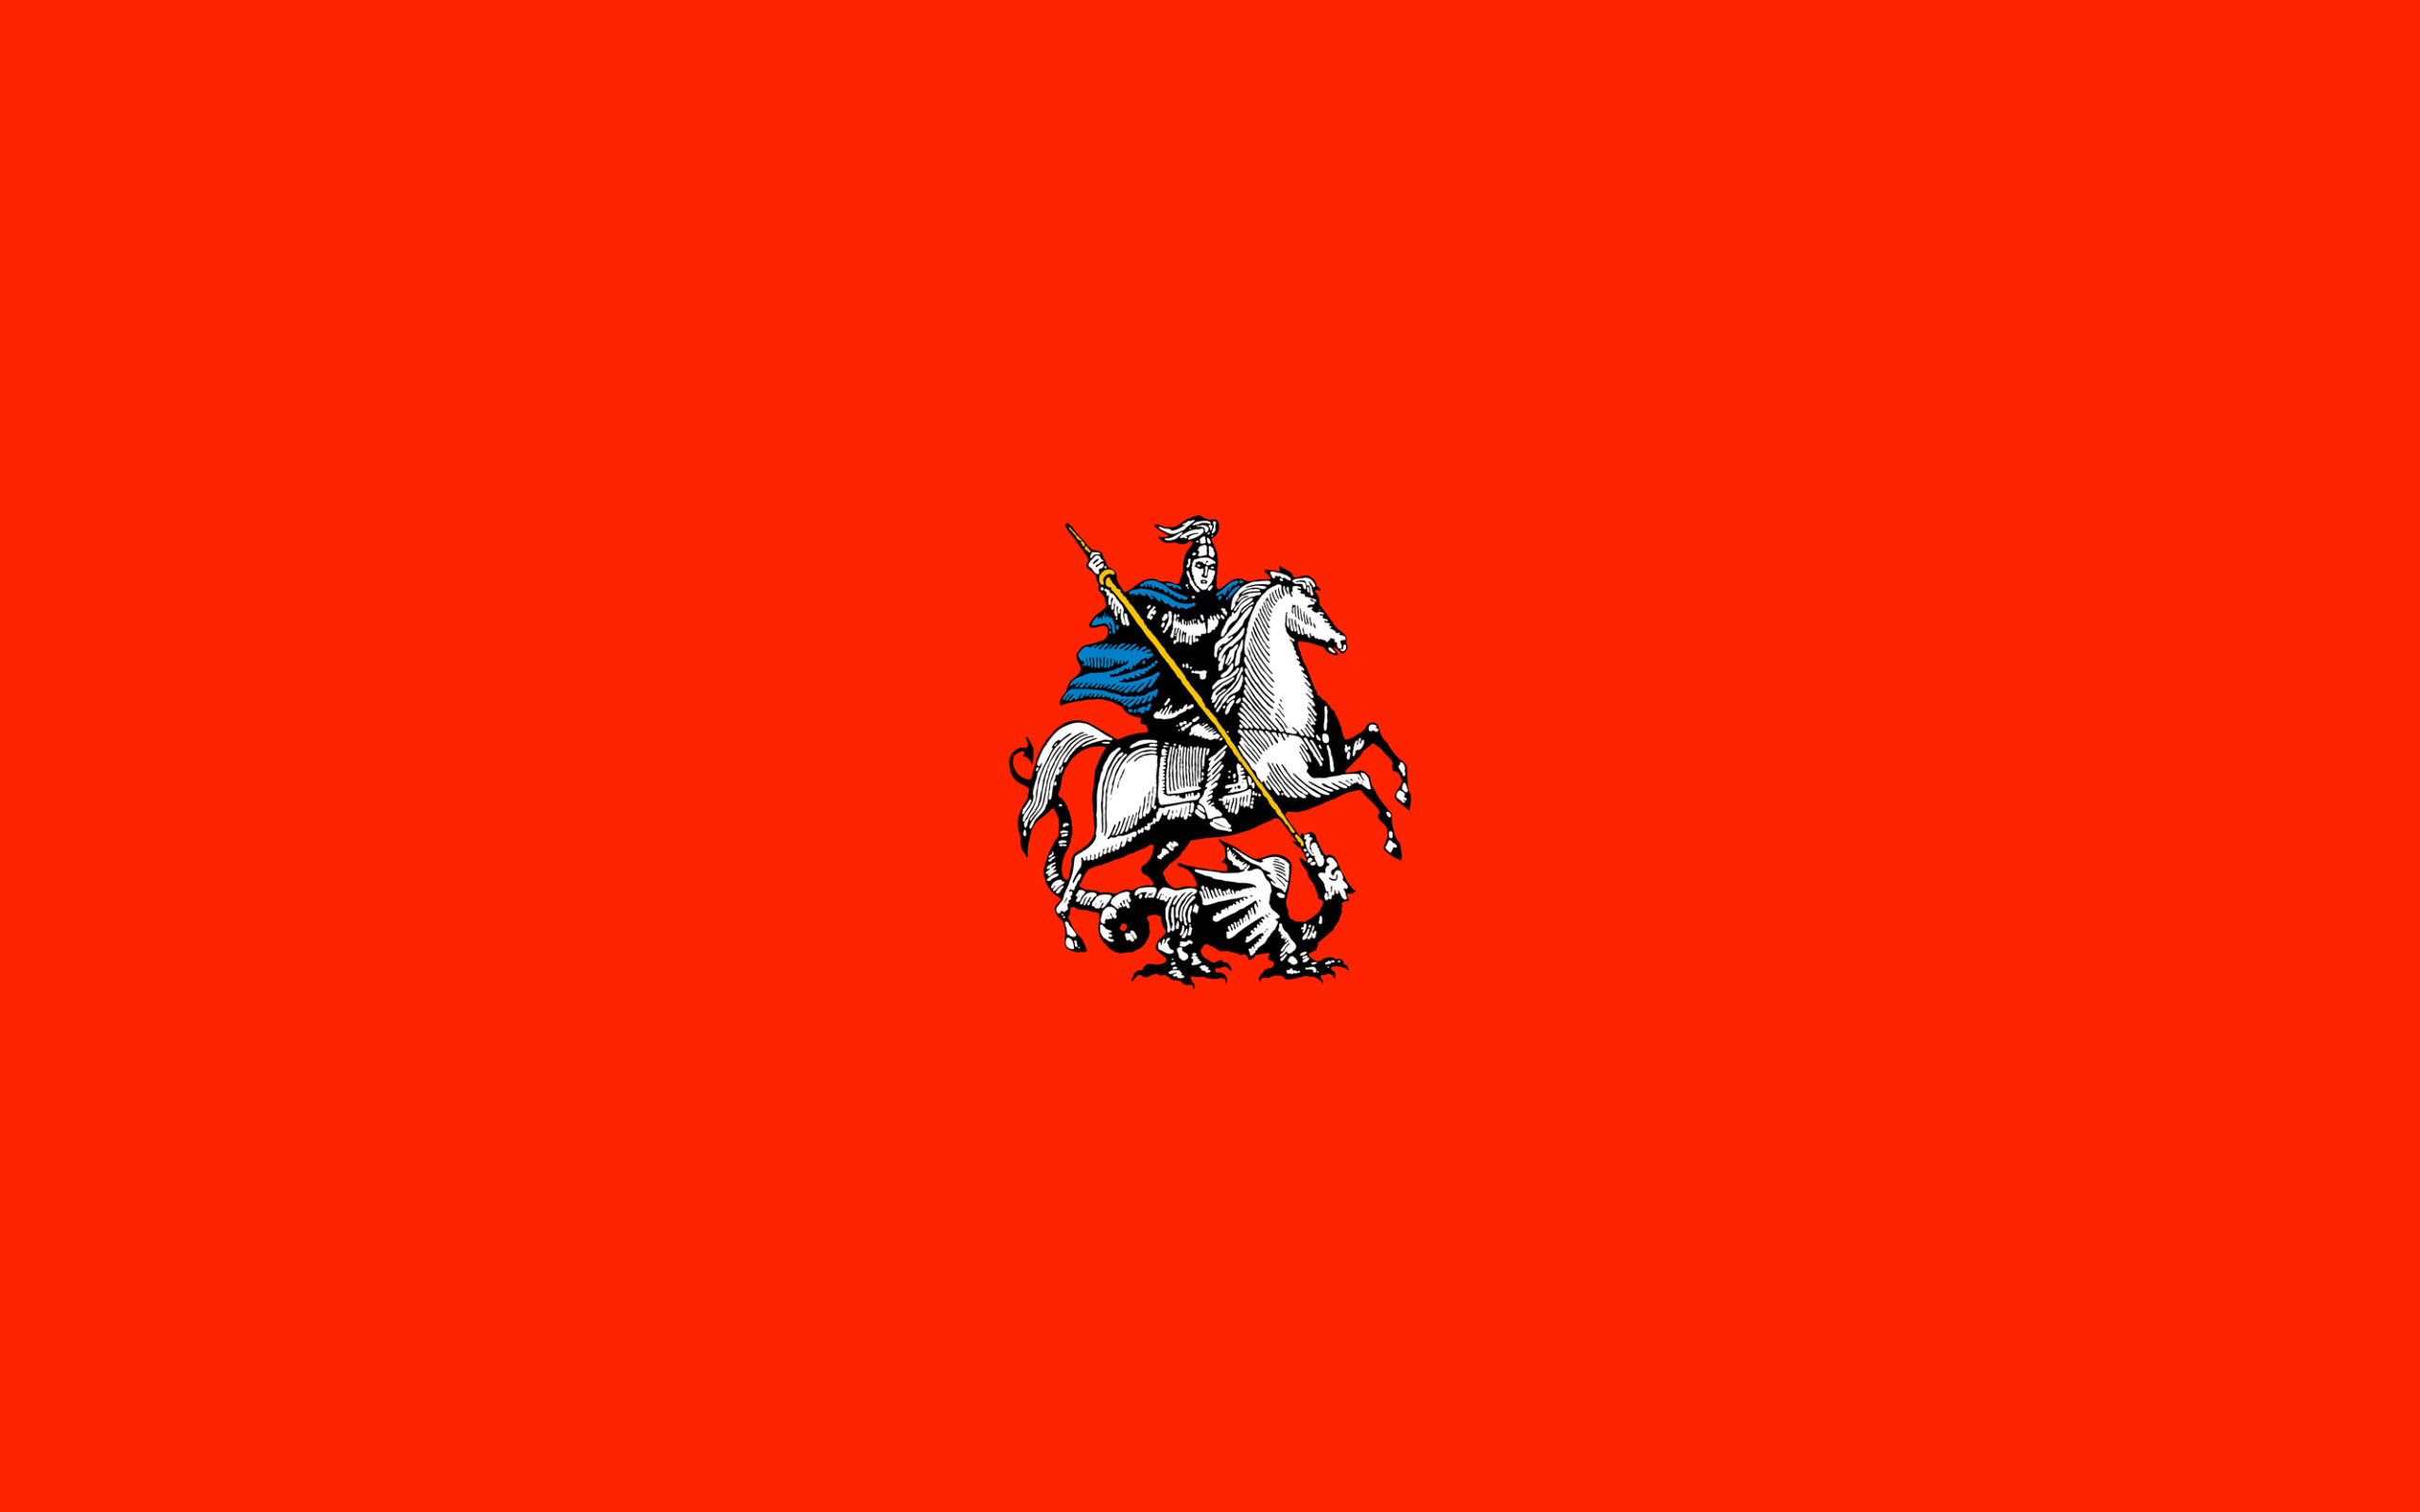 герб или флаг москвы